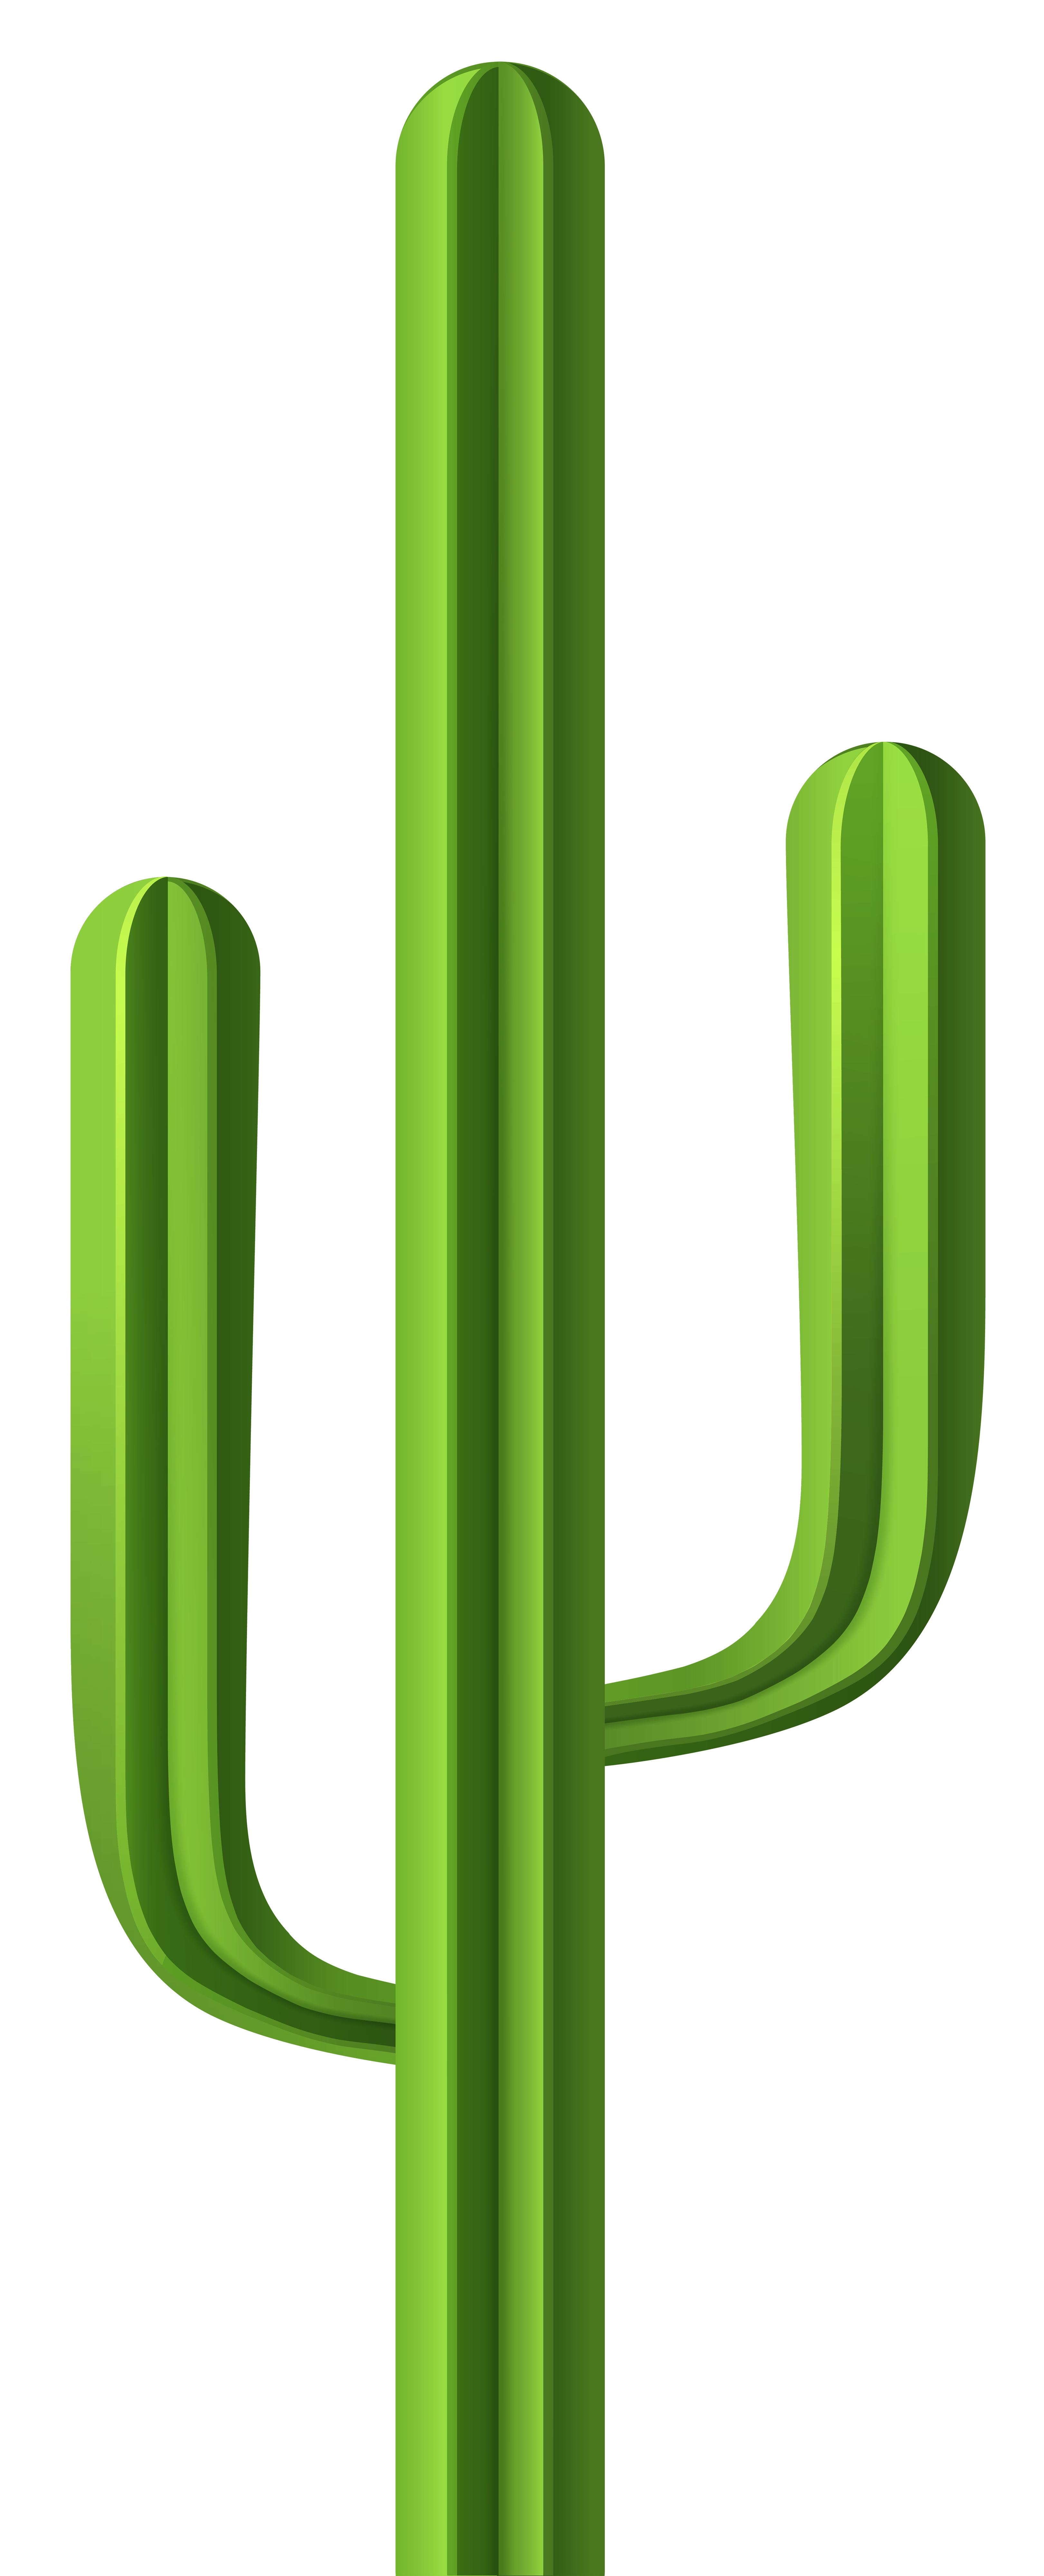 Png clip art image. Clipart tree cactus